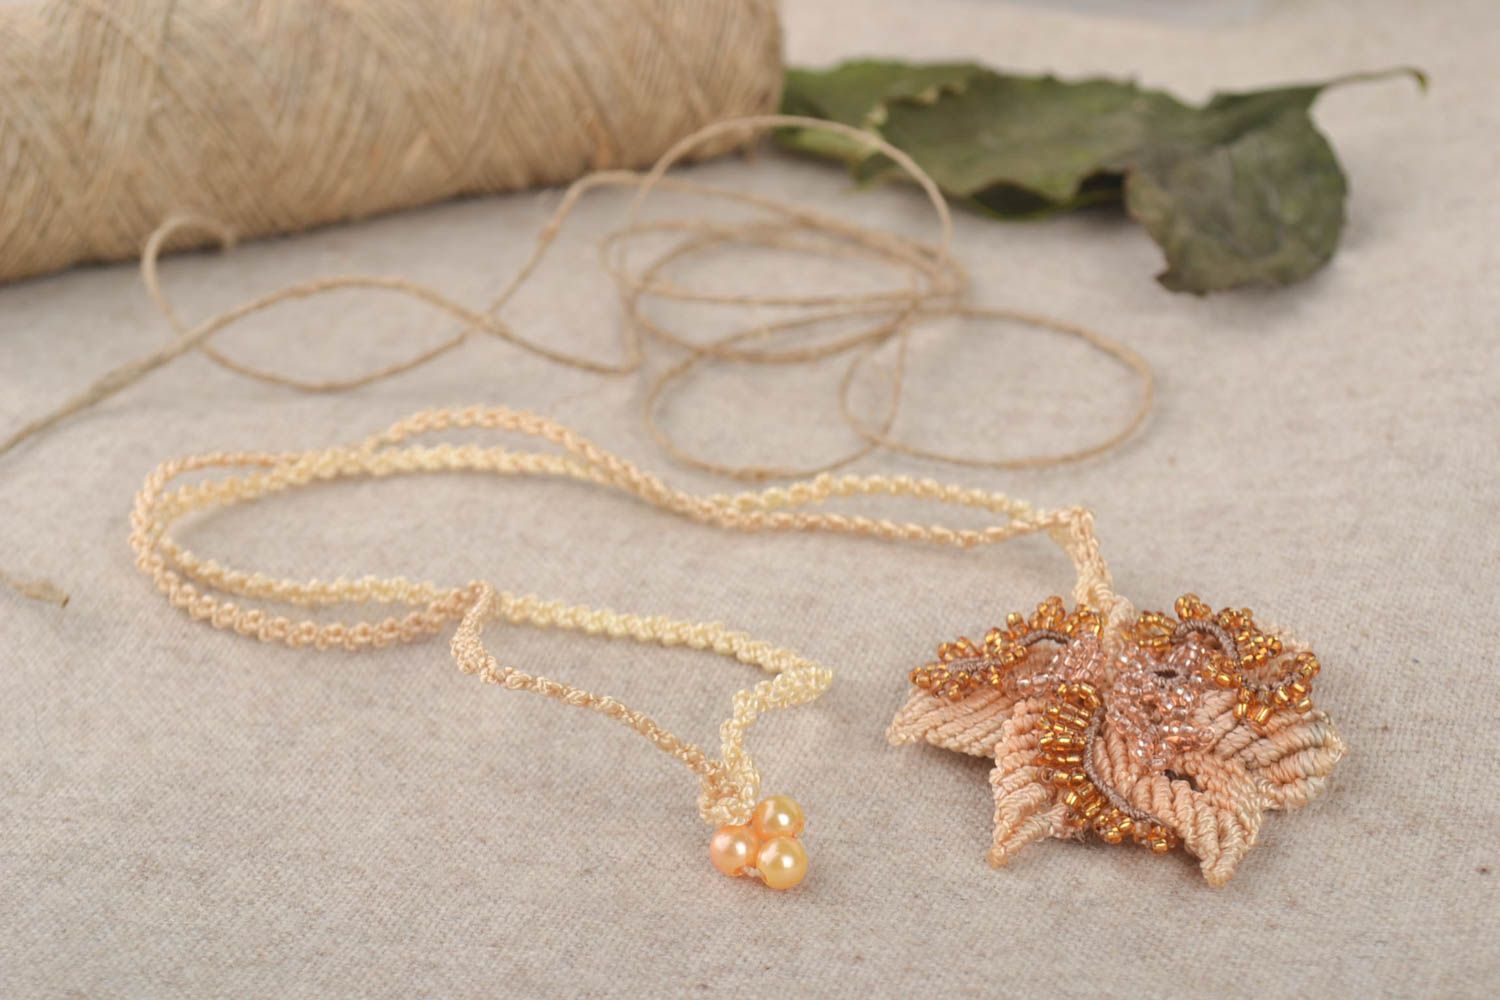 Handmade pendant designer pendant unusual accessory macrame jewelry gift ideas photo 1